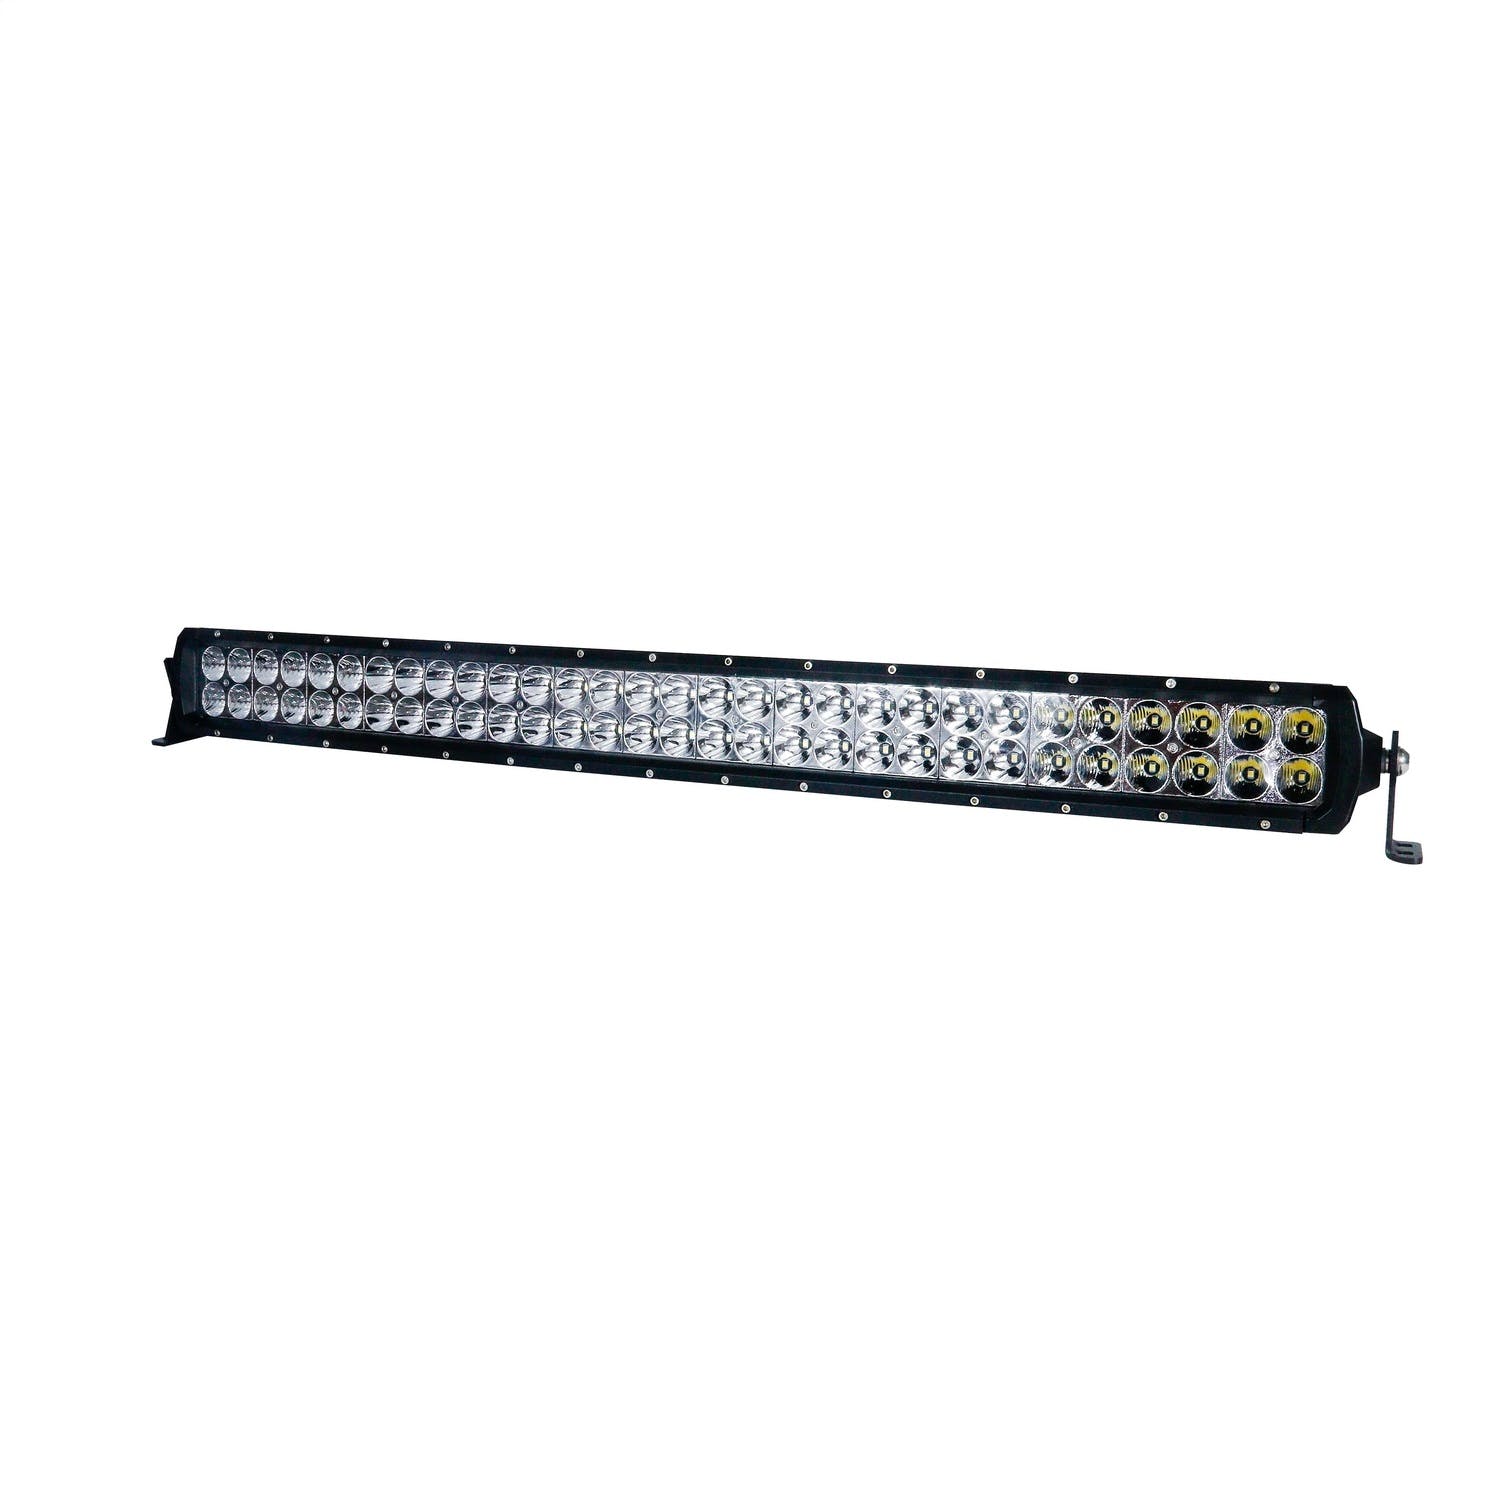 BrightSource 72530 Eco2 Series LED Light Bar